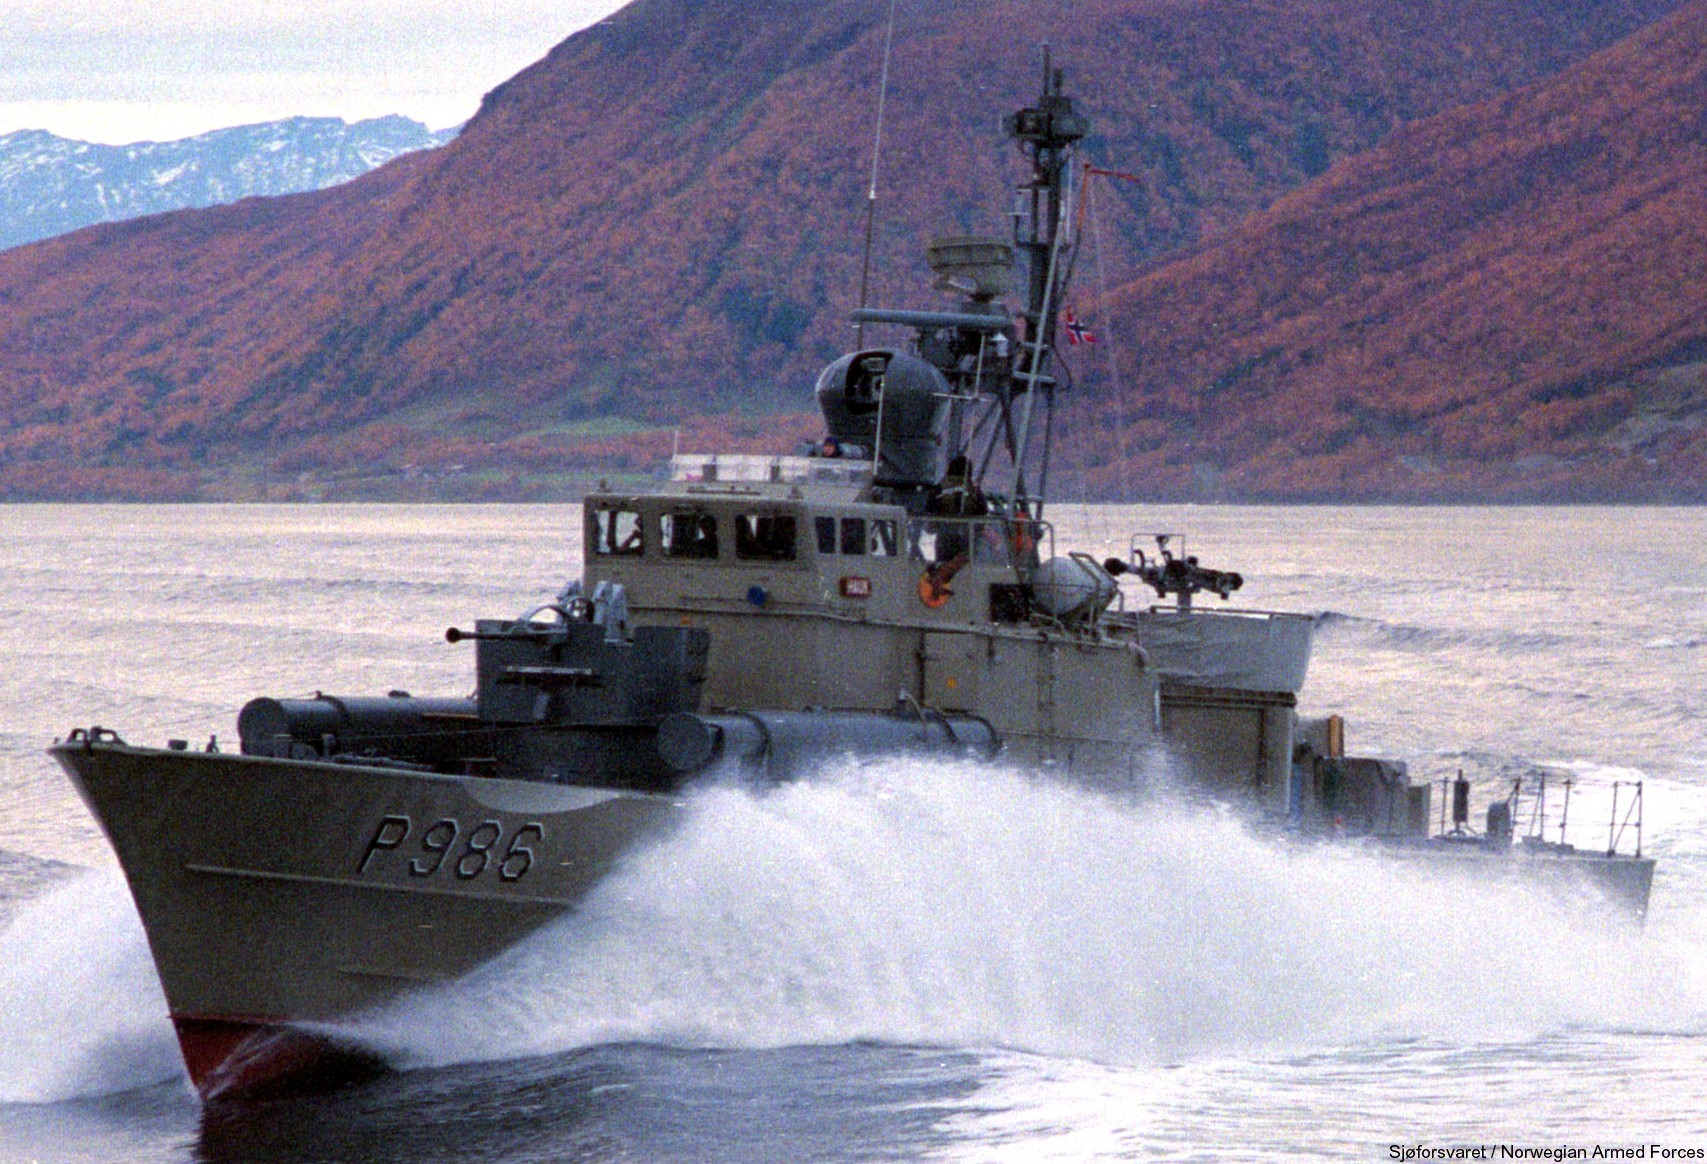 p-986 knm hauk class fast attack missile torpedo craft boat norwegian navy sjøforsvaret 04